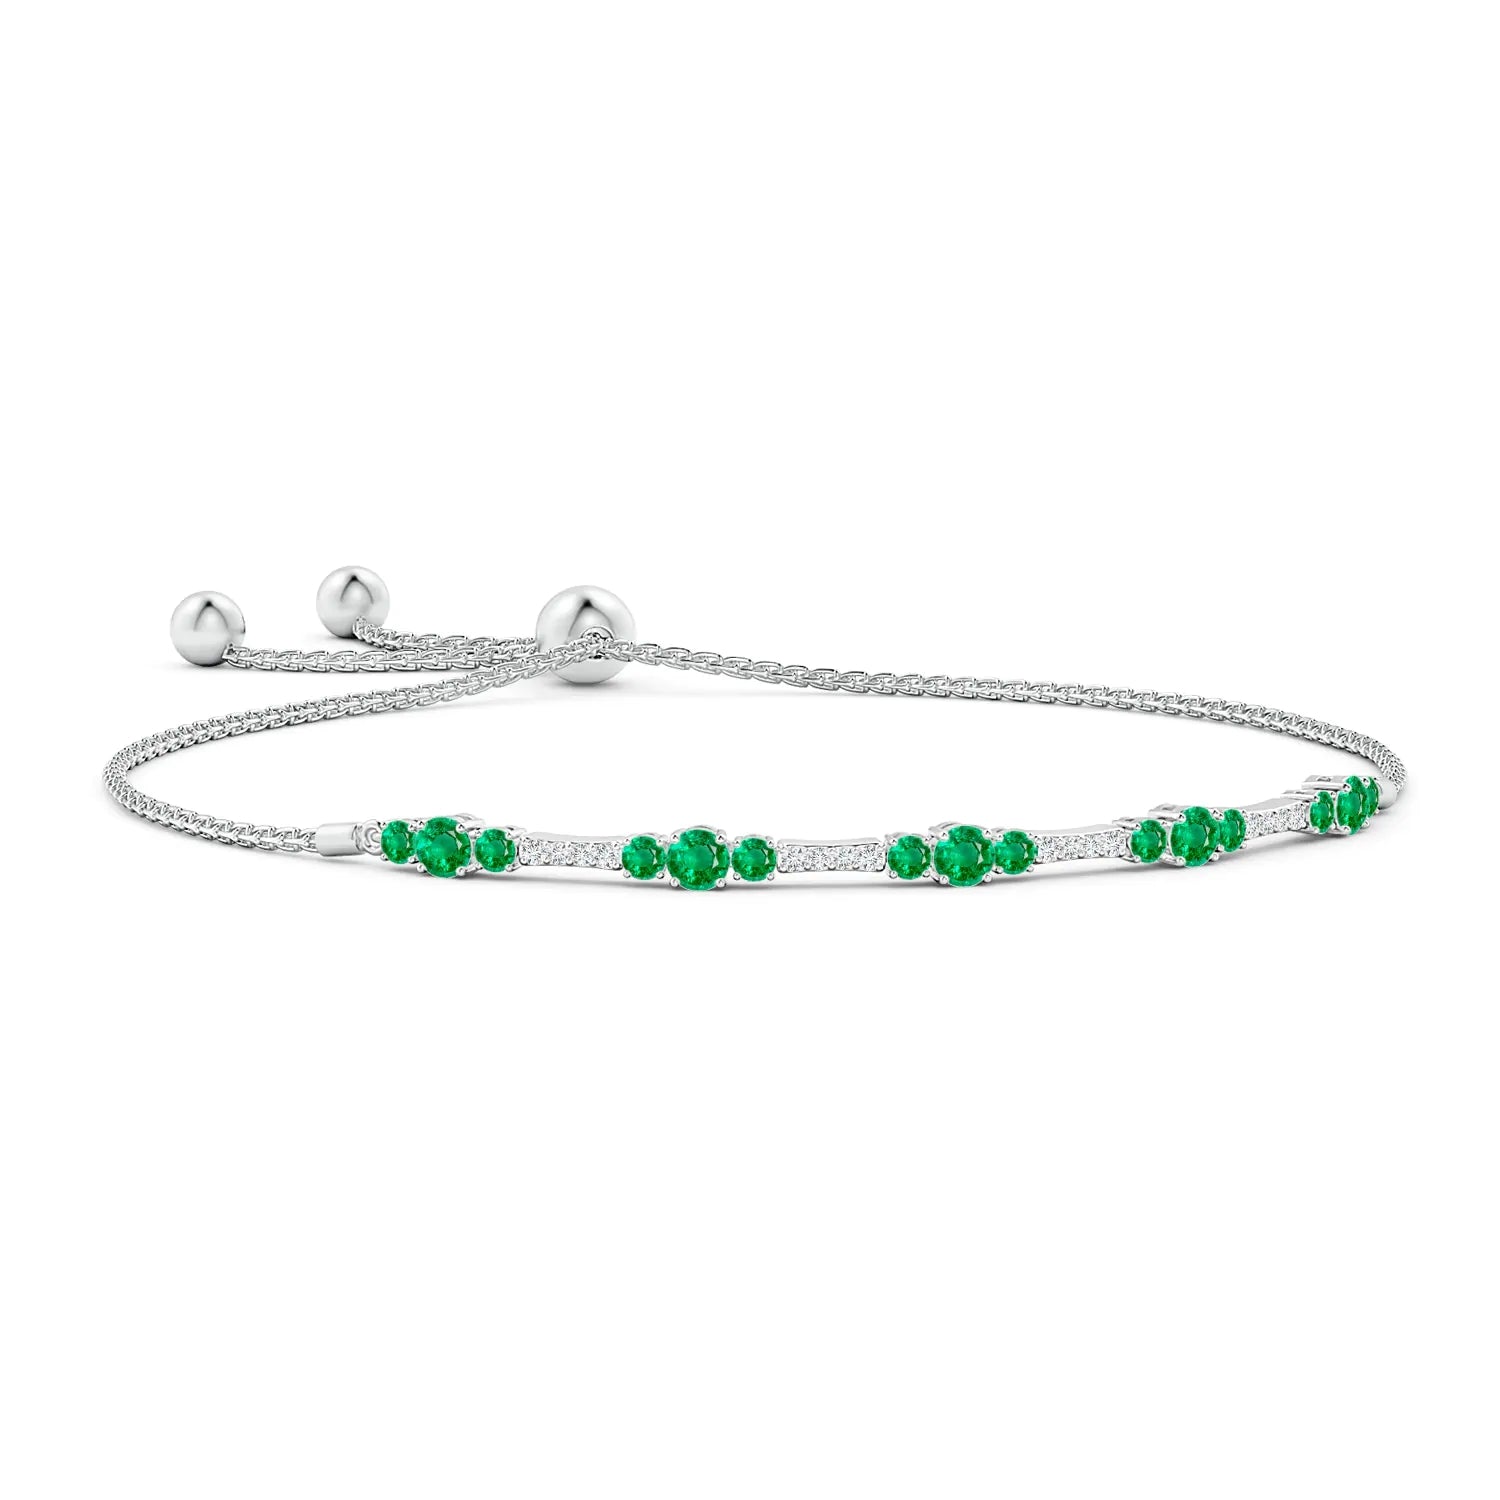 1.52 CT. Emerald and White Sapphire Bolo Bracelet